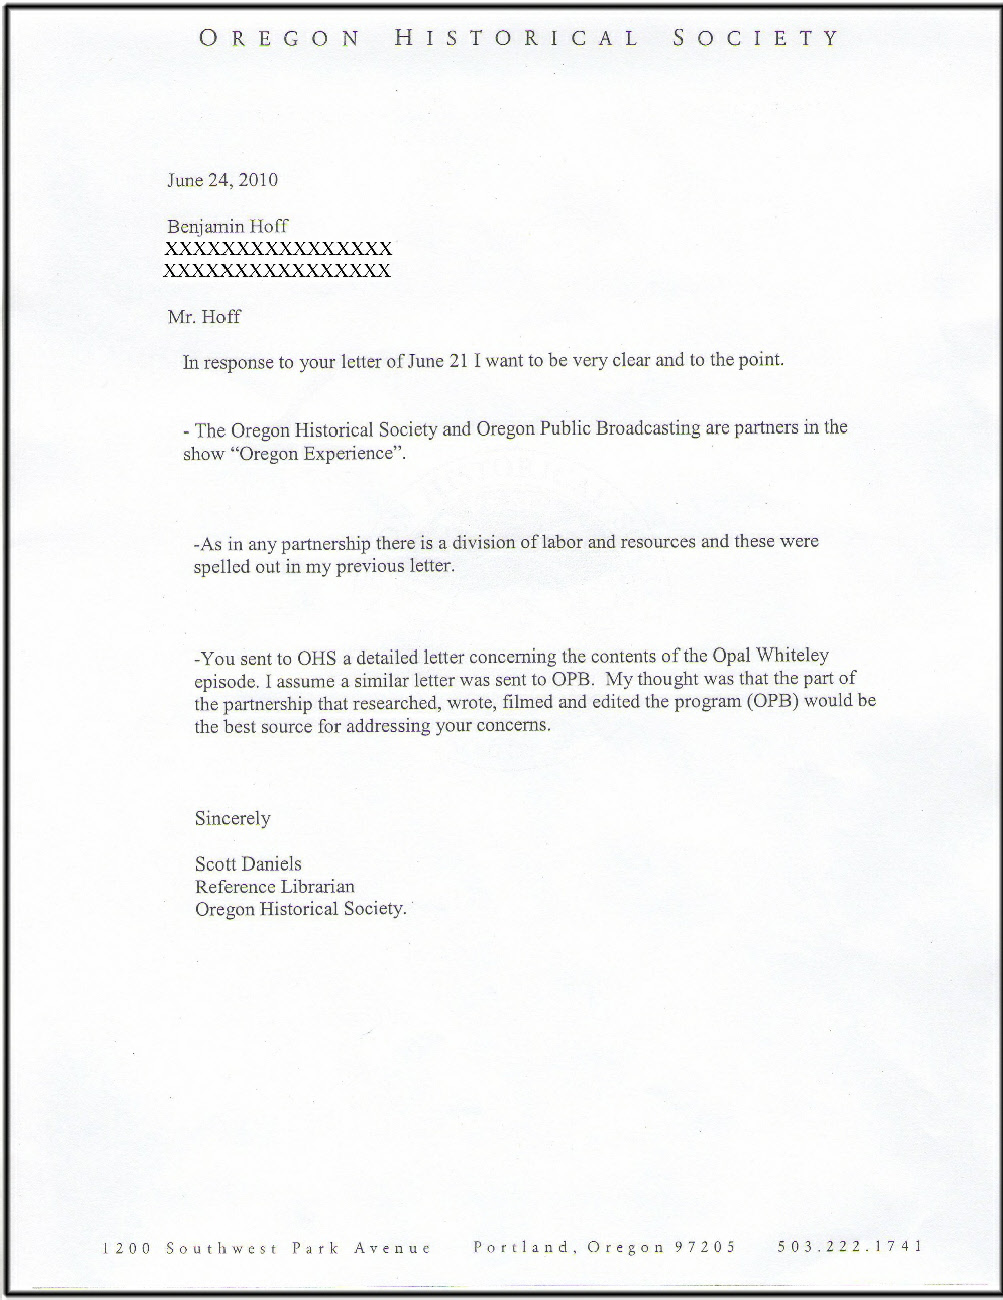 Reply from Scott Daniels of OHS to Benjamin Hoff June 2010